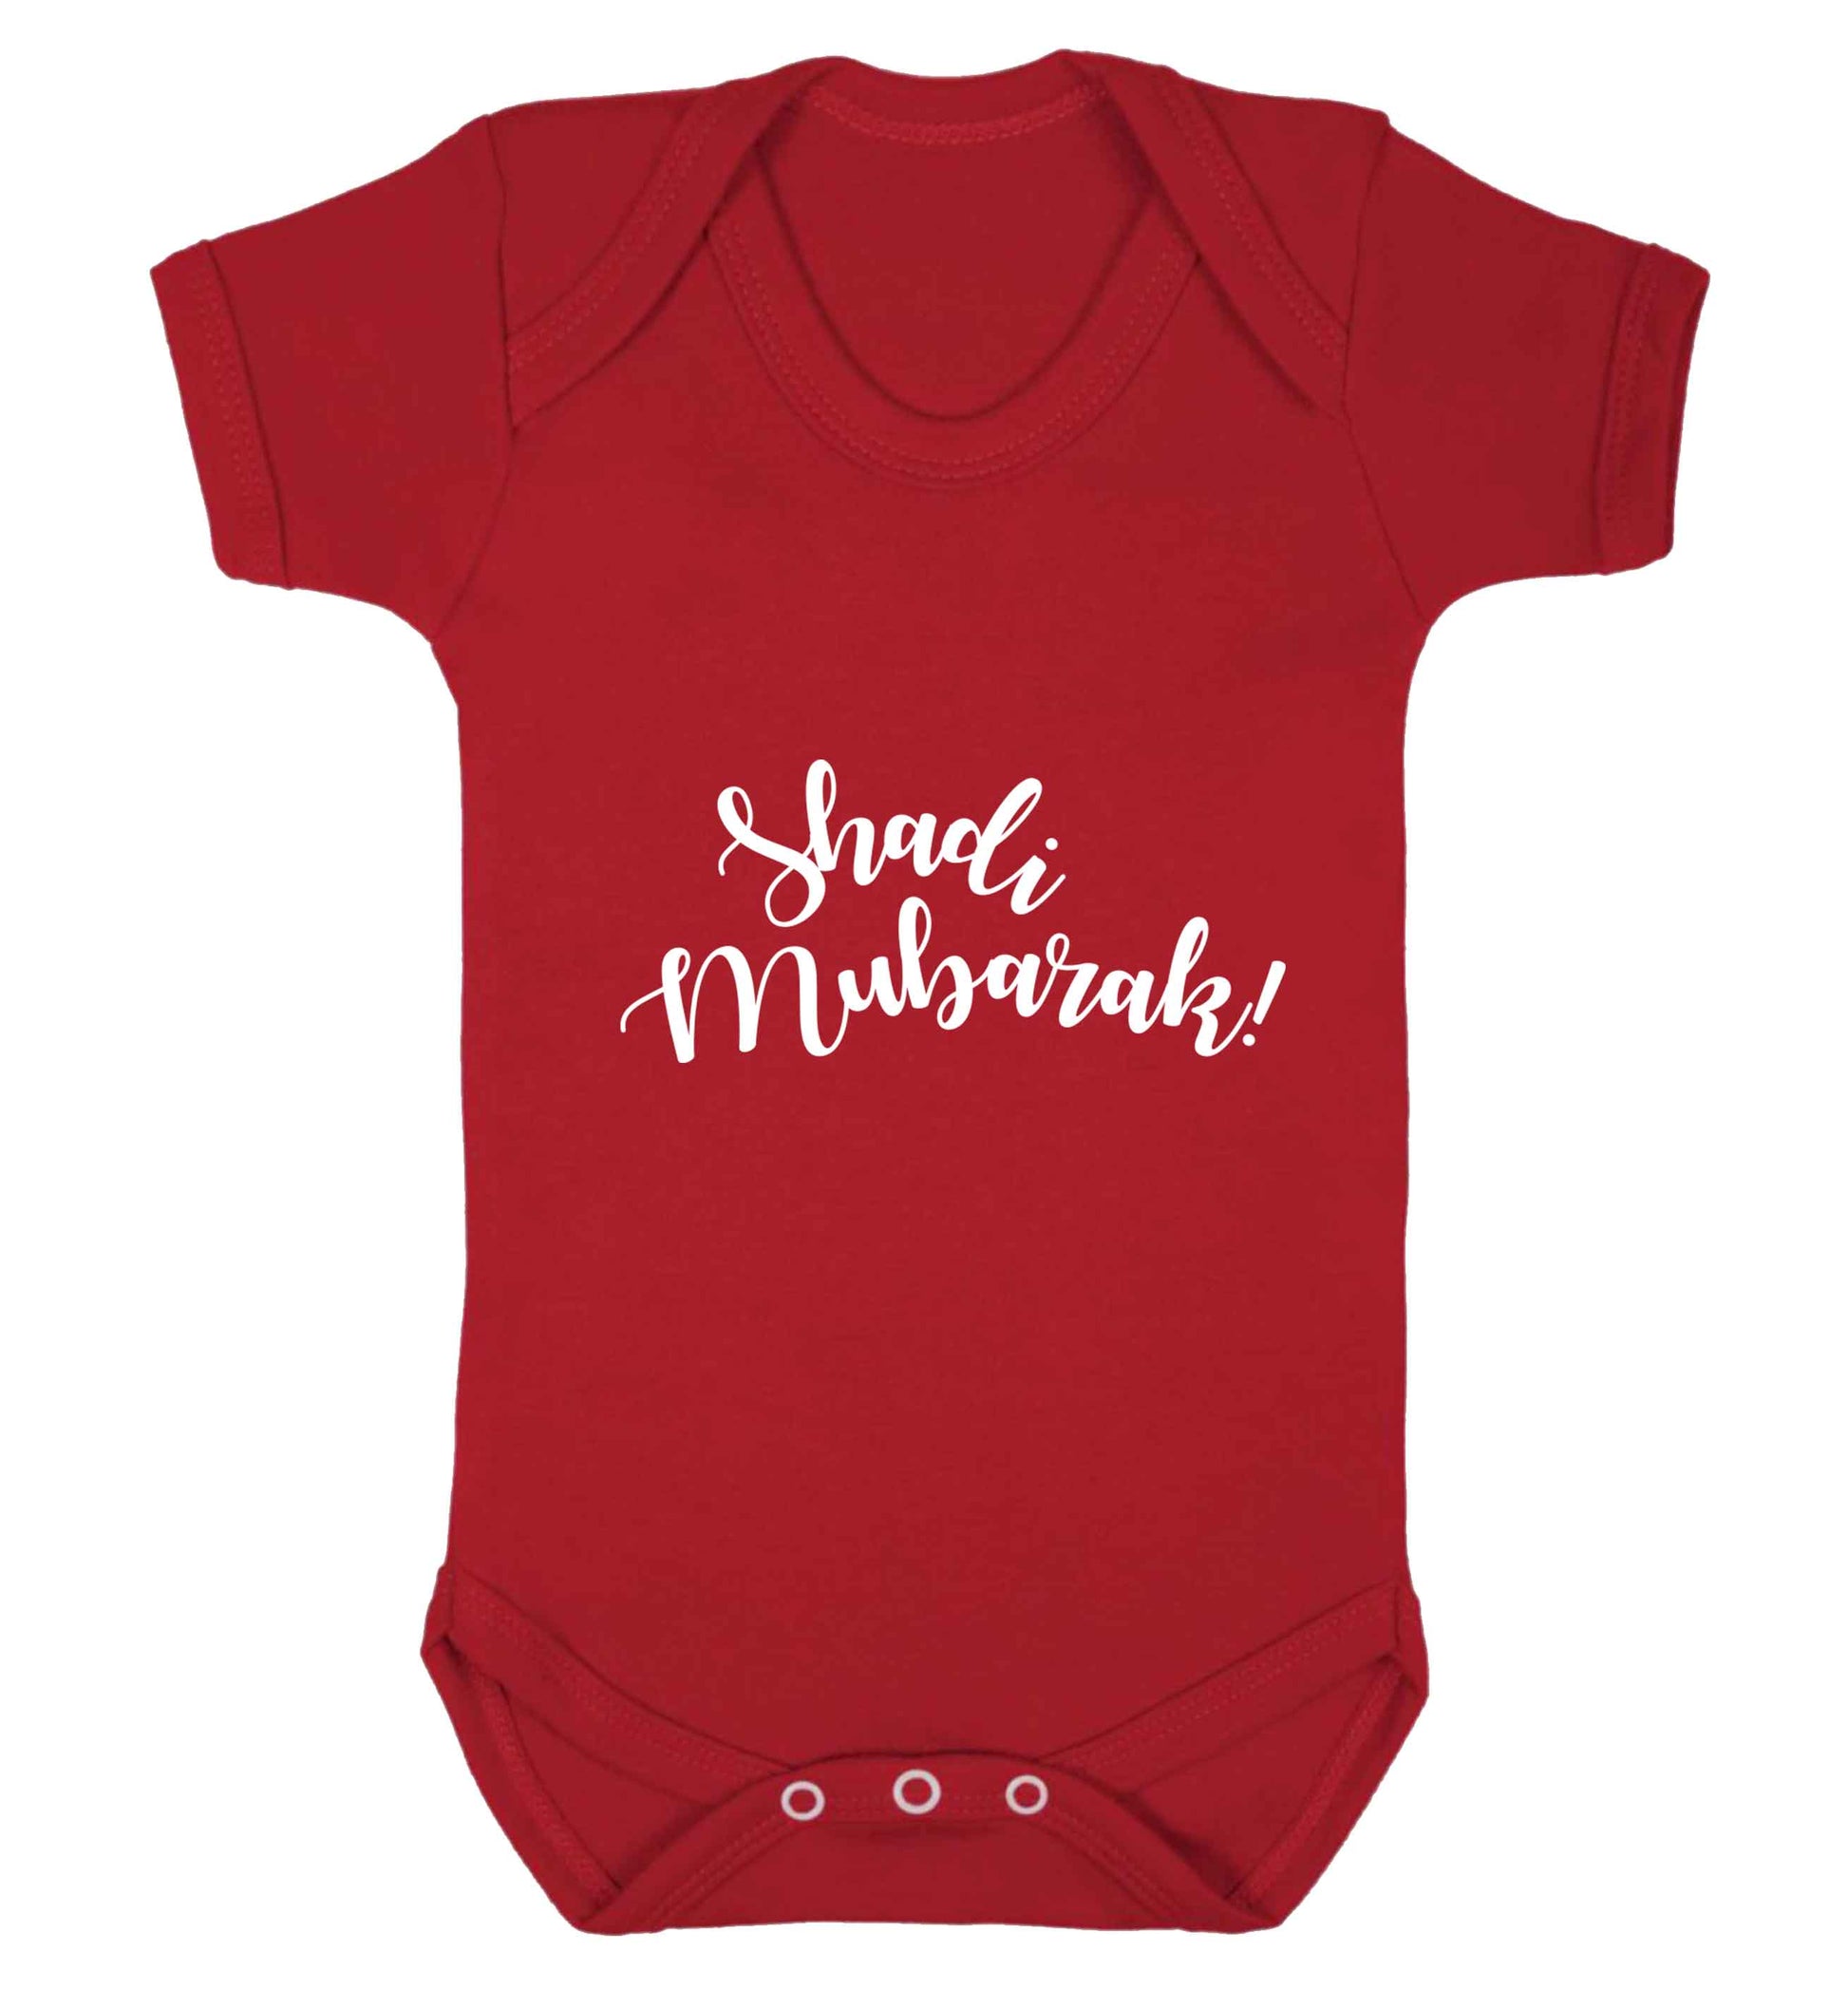 Shadi mubarak baby vest red 18-24 months